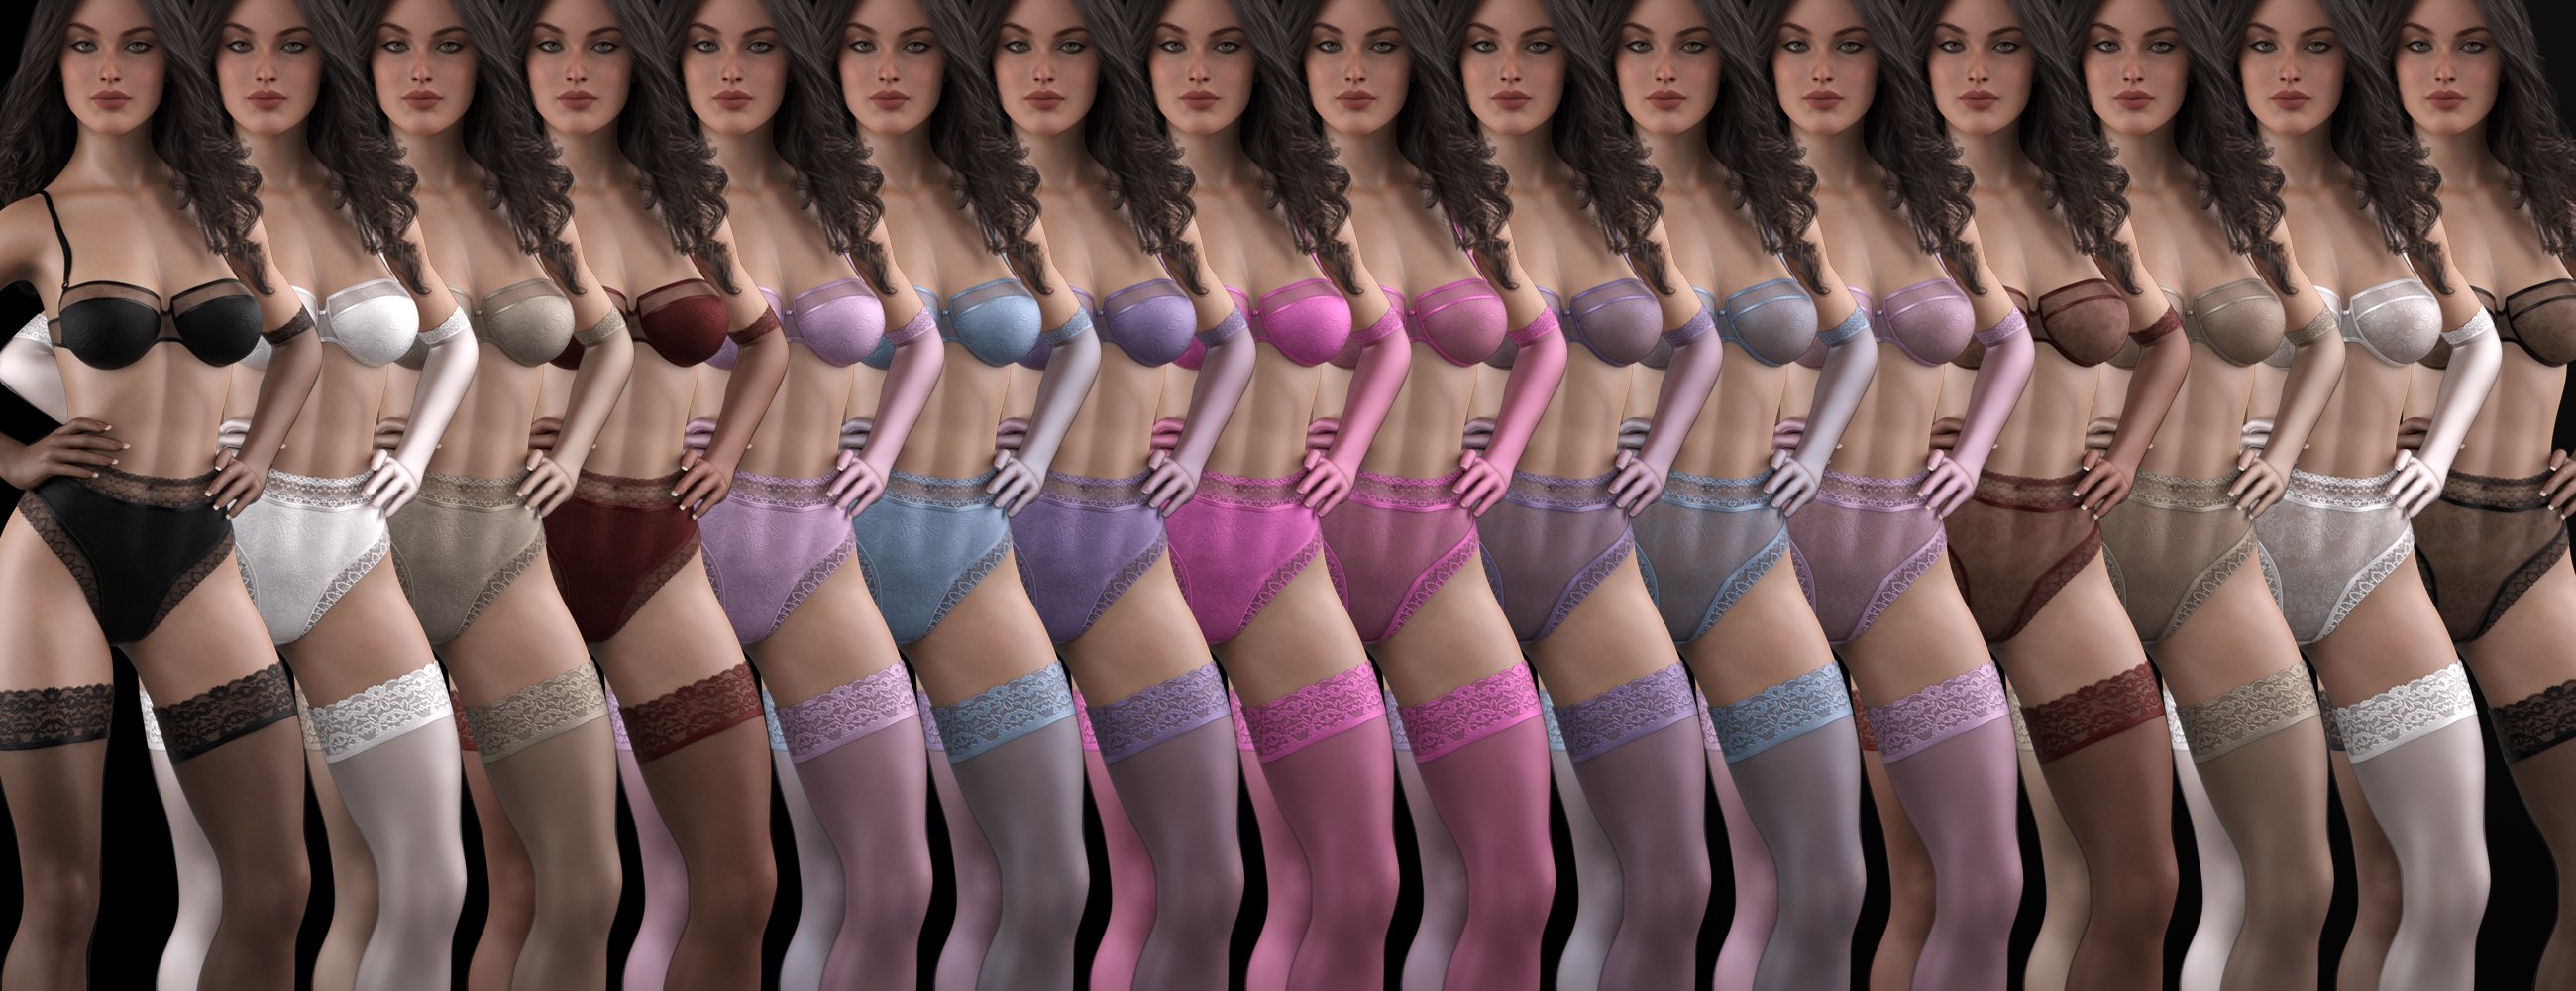 Angel Secrets Bites Vol2 Lingerie for Genesis 8 and 8.1 Females by: Val3dartbiuzpharb, 3D Models by Daz 3D